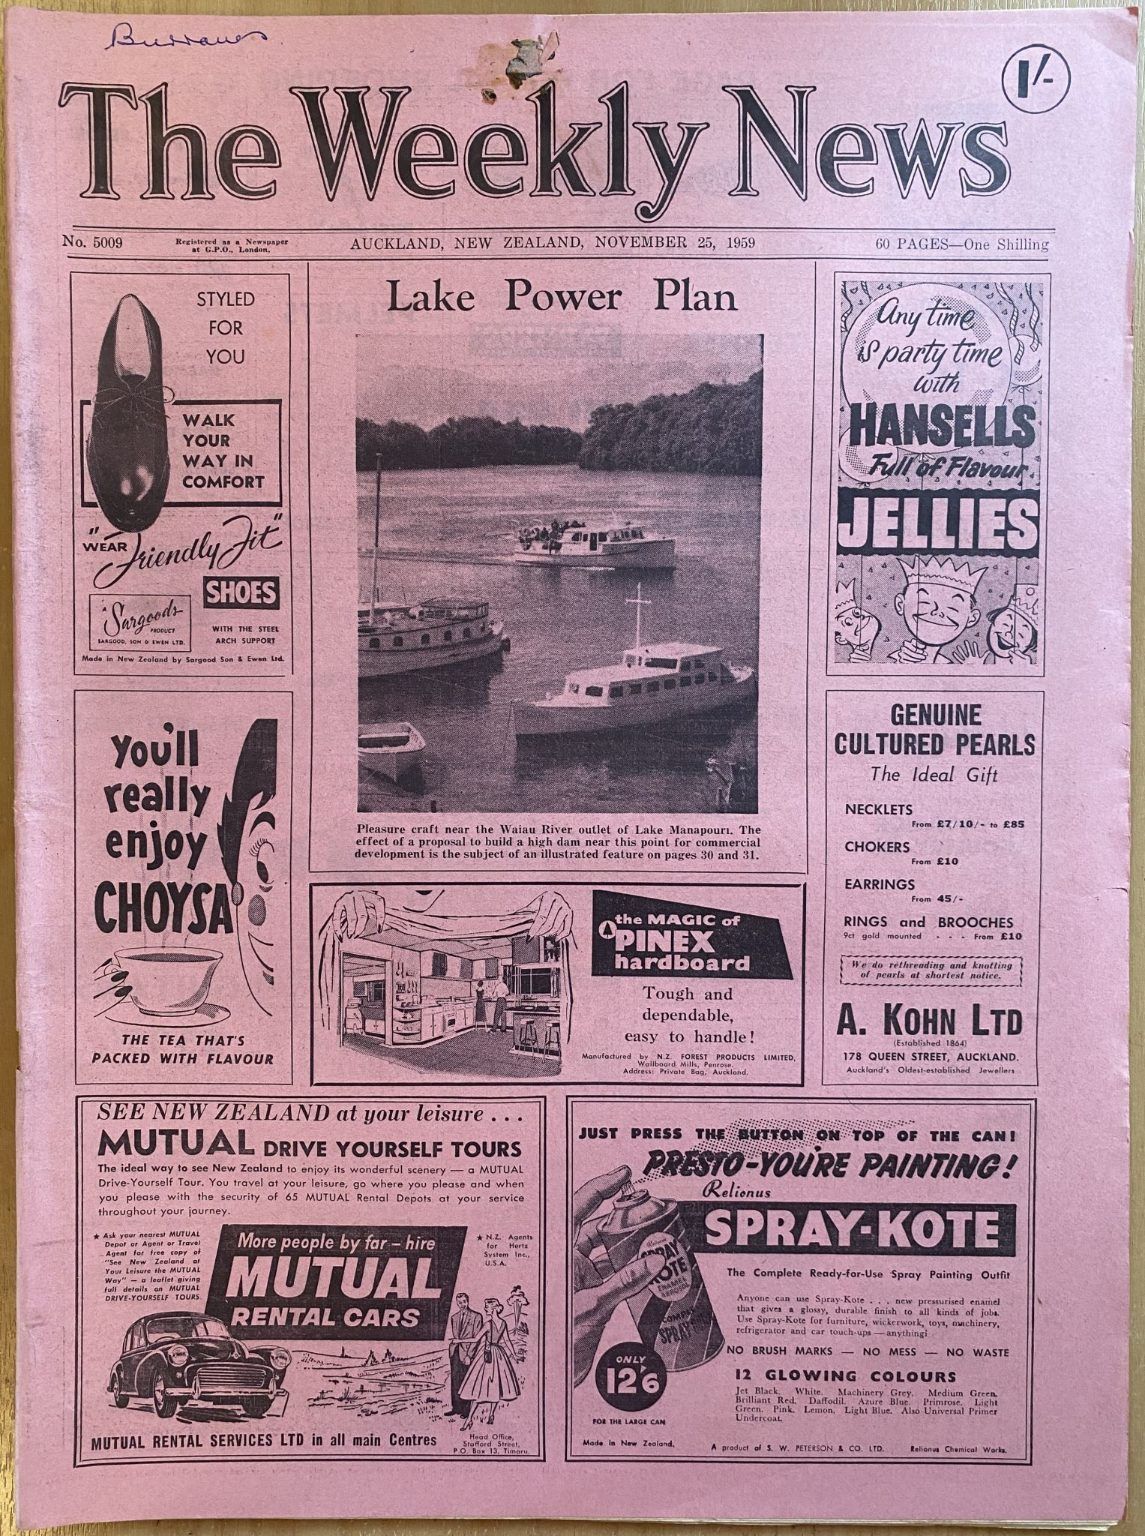 OLD NEWSPAPER: The Weekly News - No. 5009, 25 November 1959